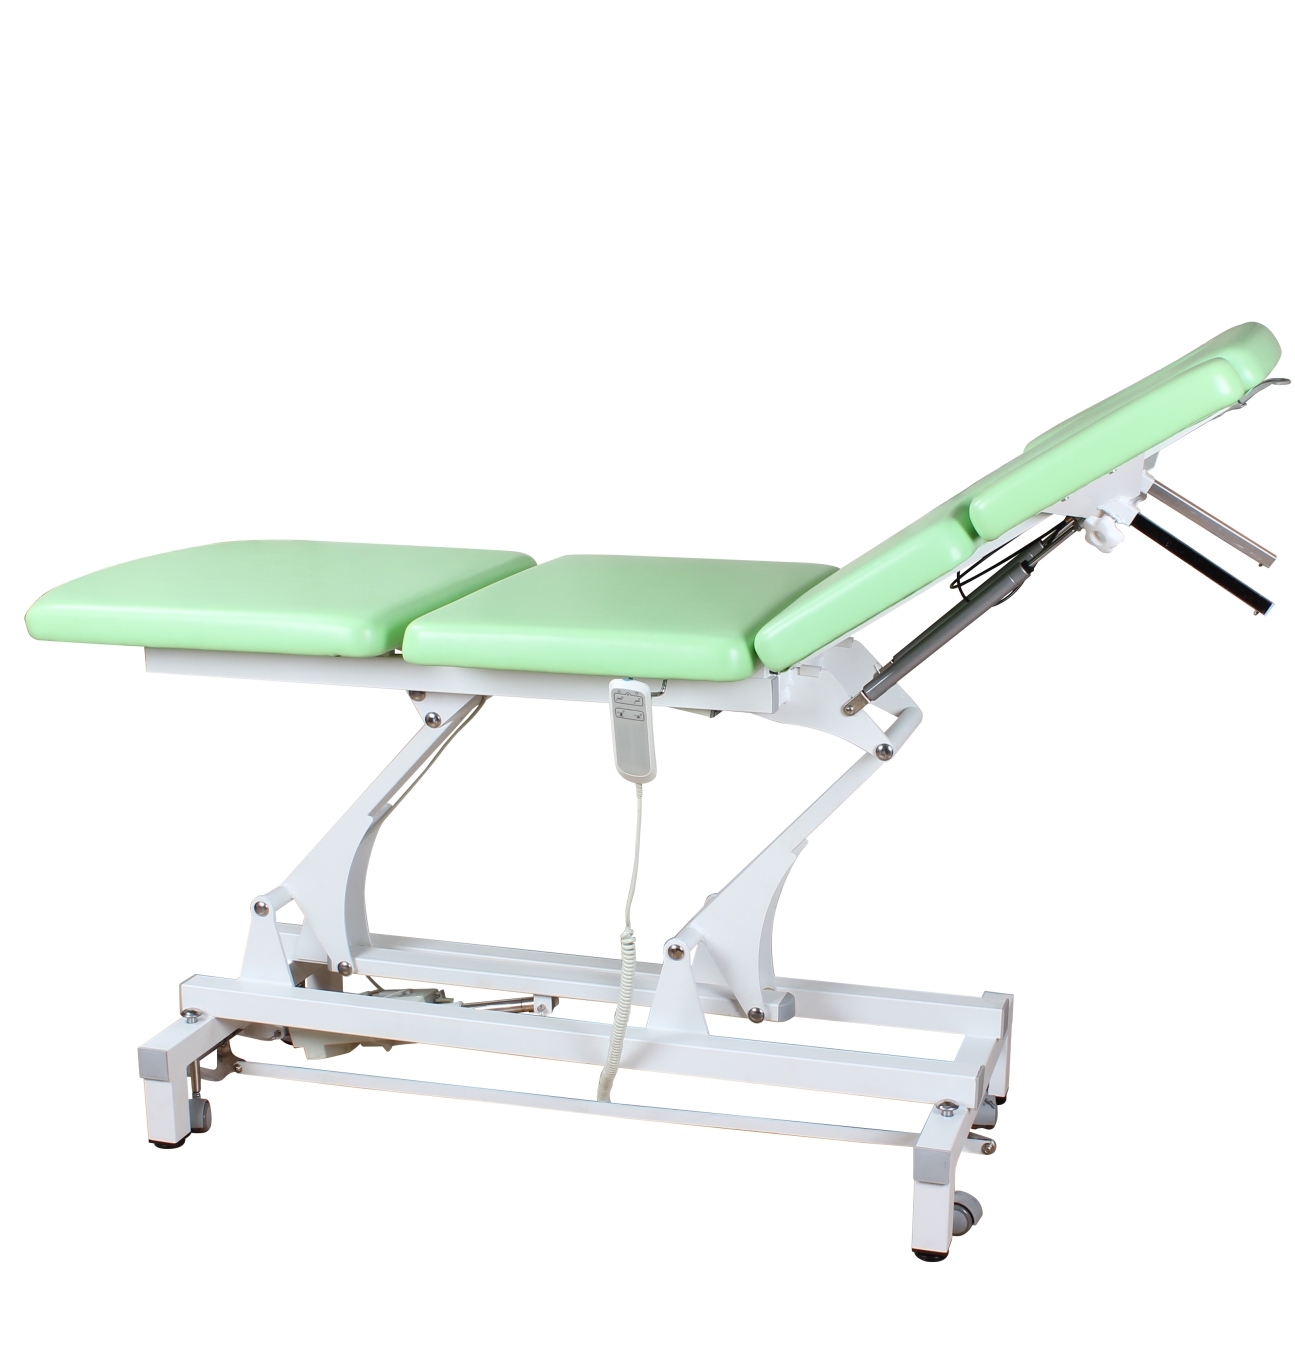 DP-S803 Adjustable Treatment Examination Table